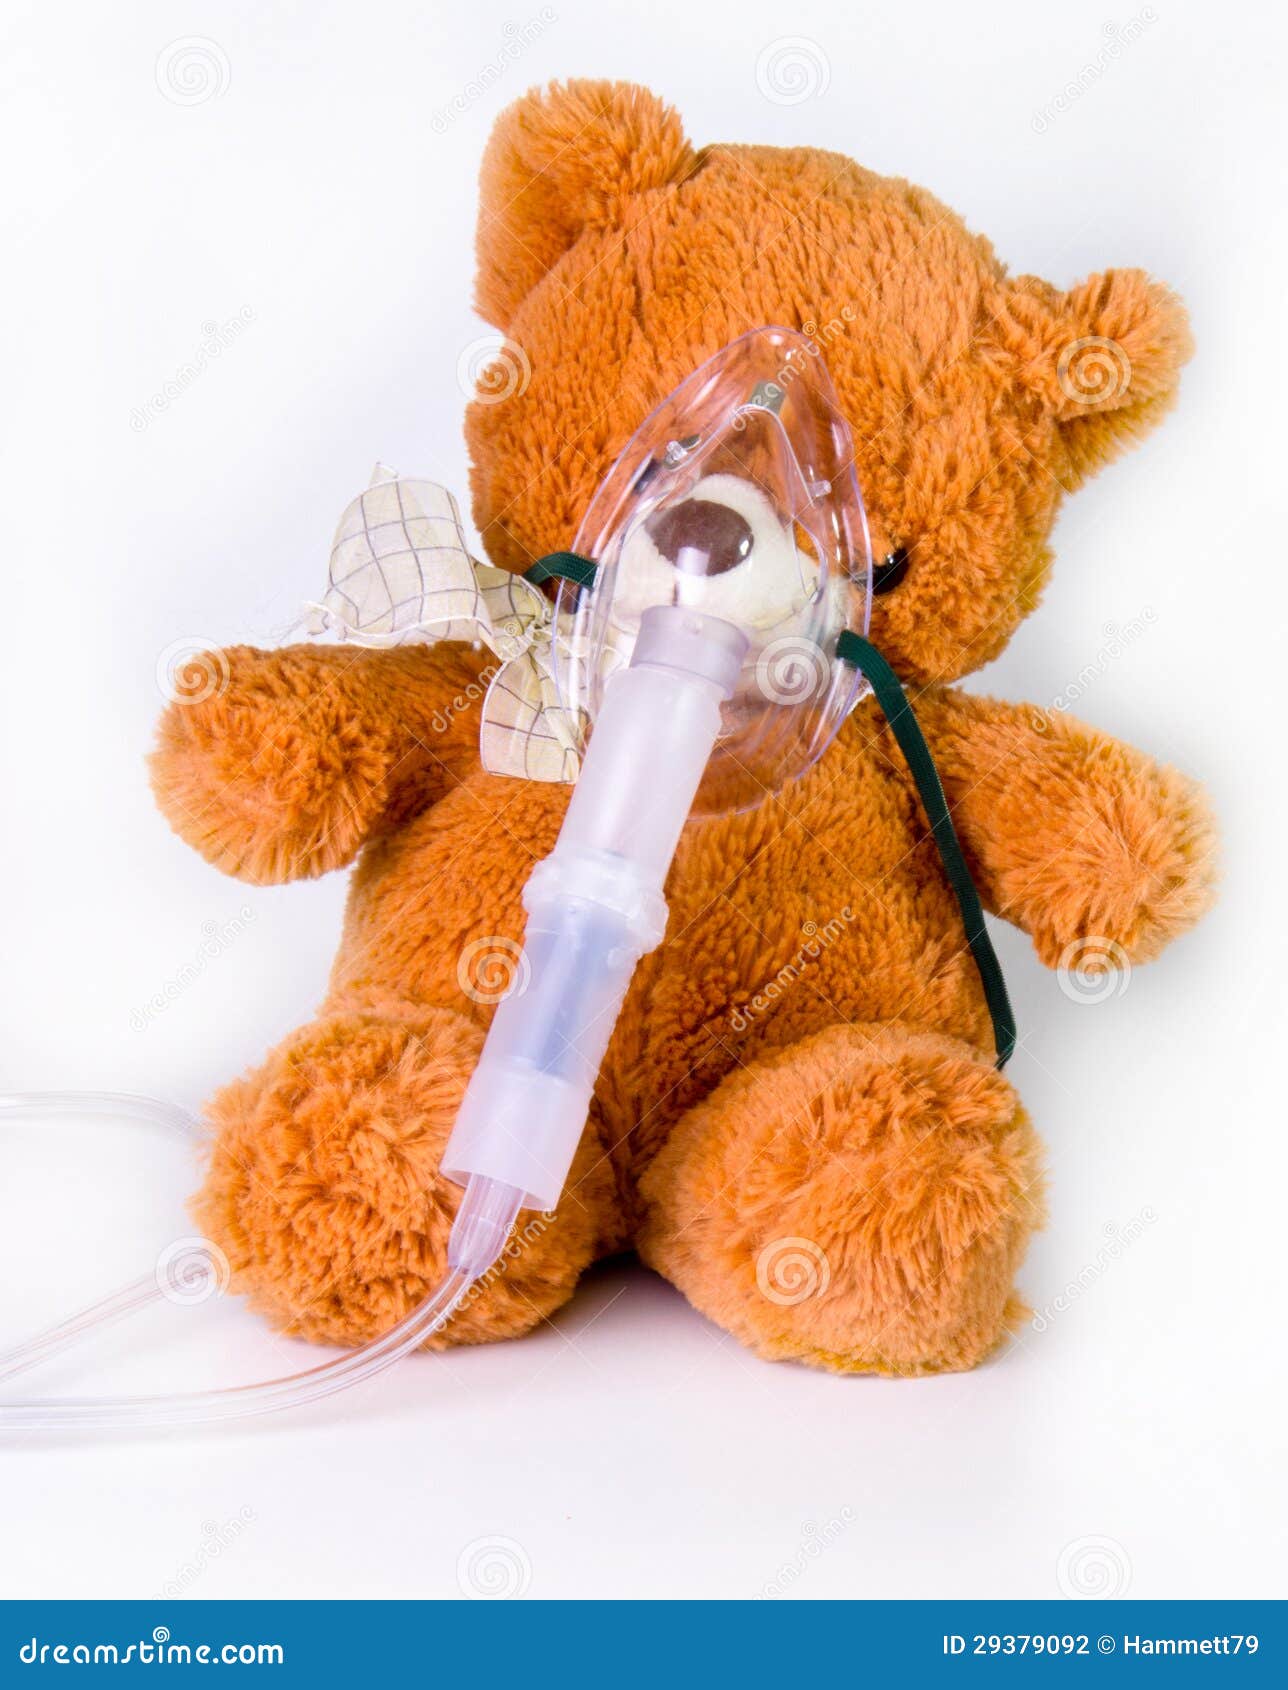 Oxygen mask on a bear stock photo Image of mask medicine 